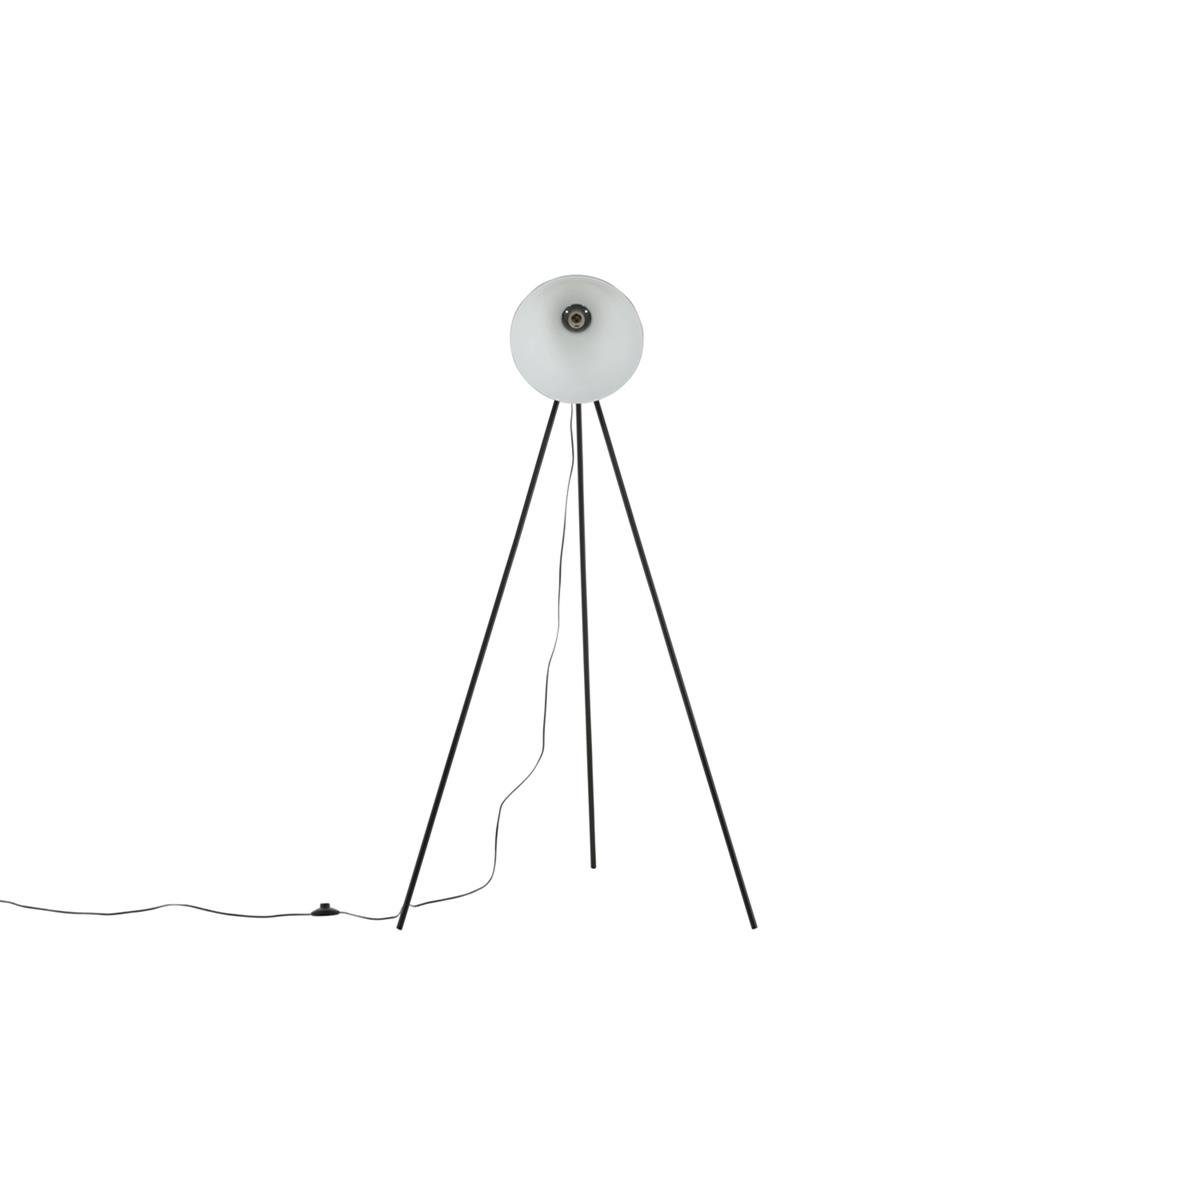 BOURGH TIV - 140 hoch - Industrial Stehlampe Lampe Stehlampe cm Design